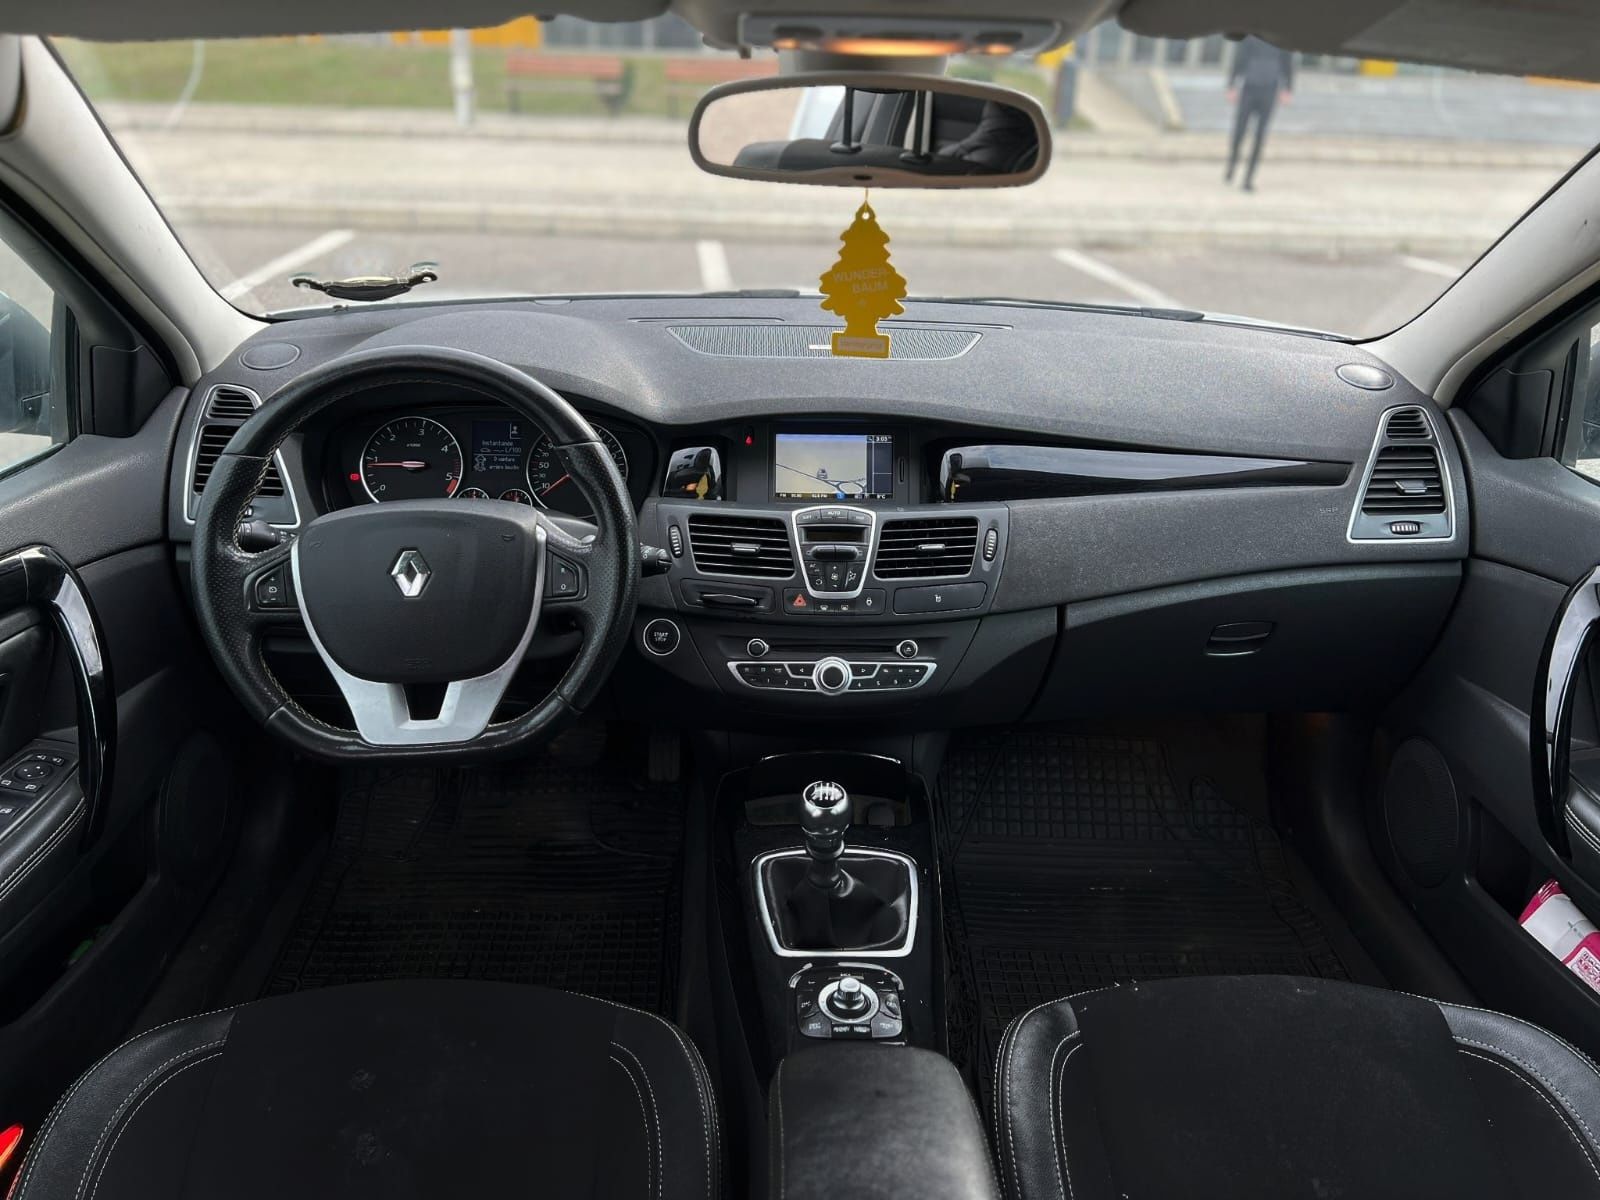 Vând Renault Laguna III, 2.0 diesel, 2013, Sistem audio BOSE